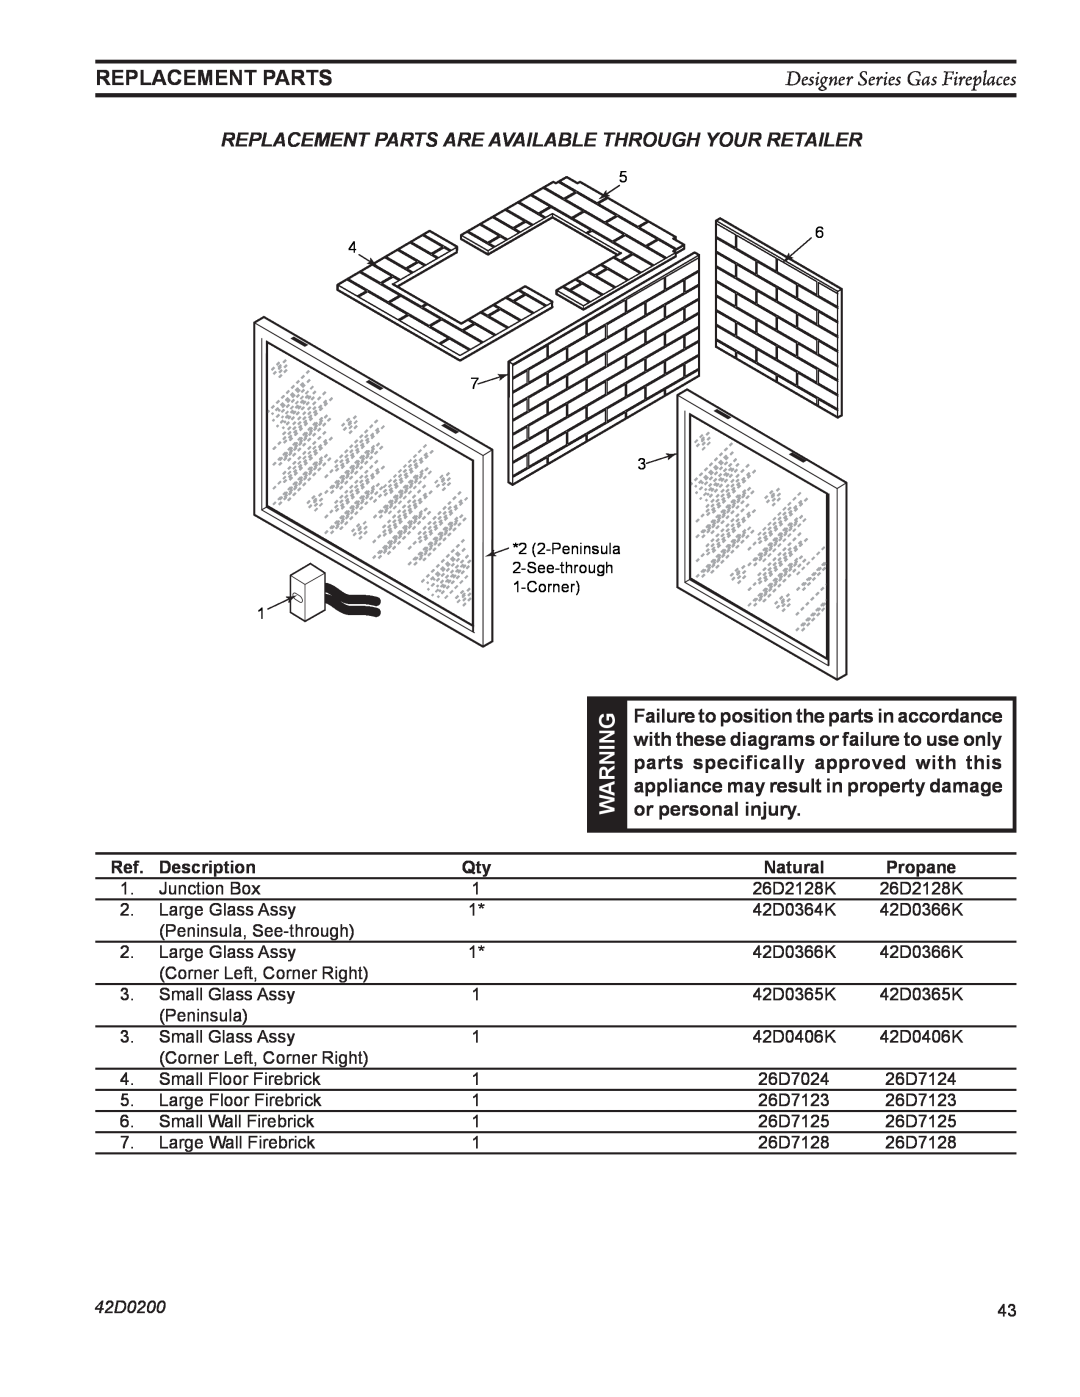 Monessen Hearth 624DV(ST, PF, CR, CL)NVC/PVC manual replacement parts, Designer Series Gas Fireplaces, Junction Box, 42D0200 